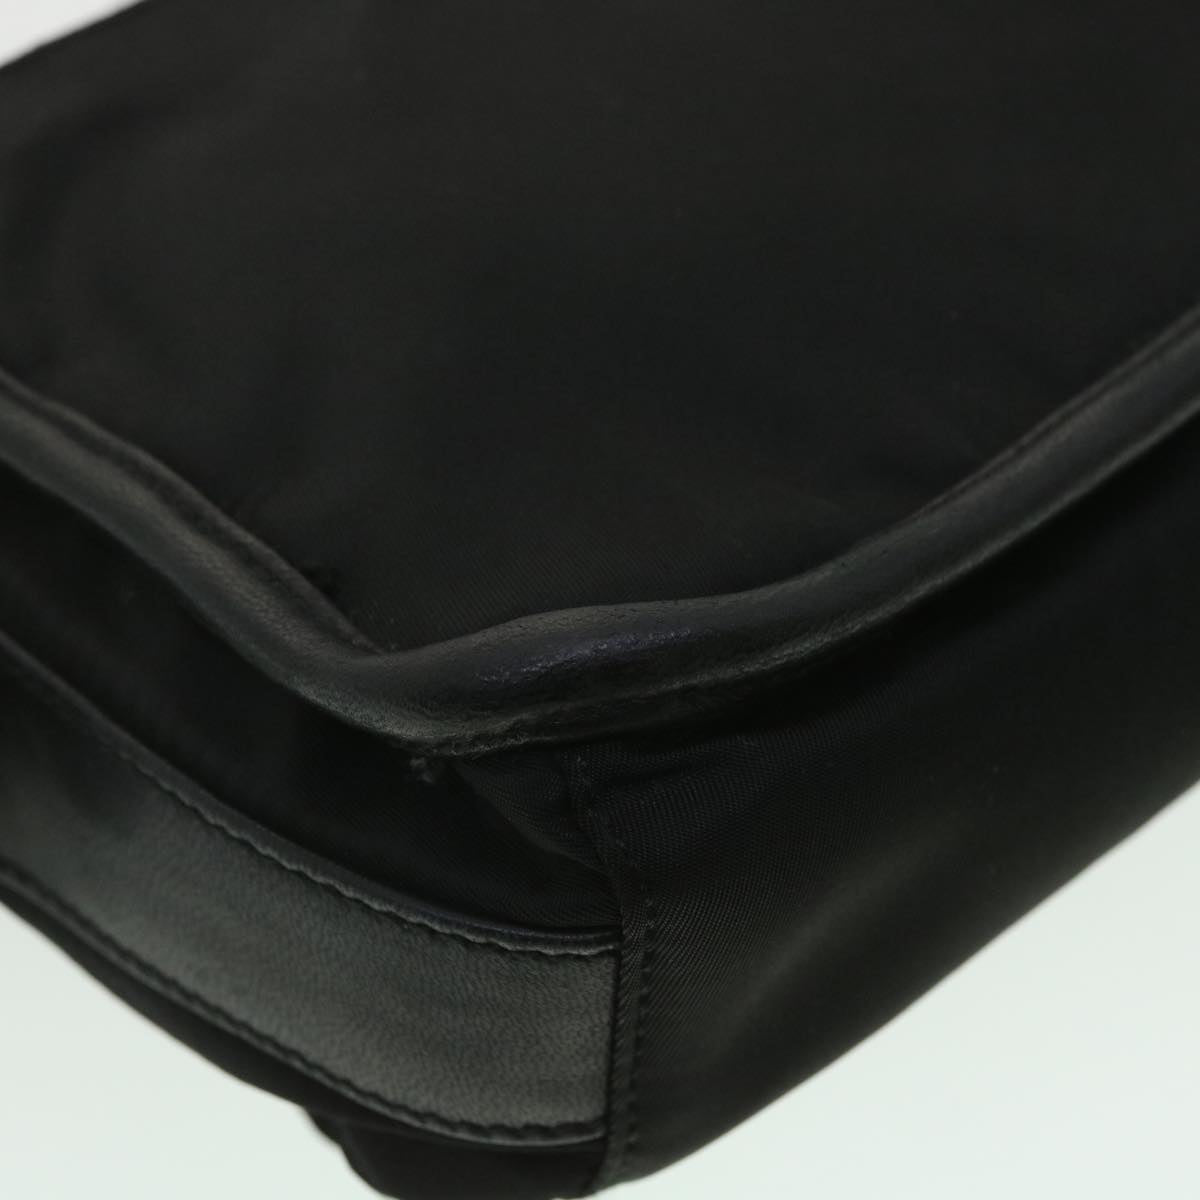 PRADA Shoulder Bag Nylon Black Auth 36246